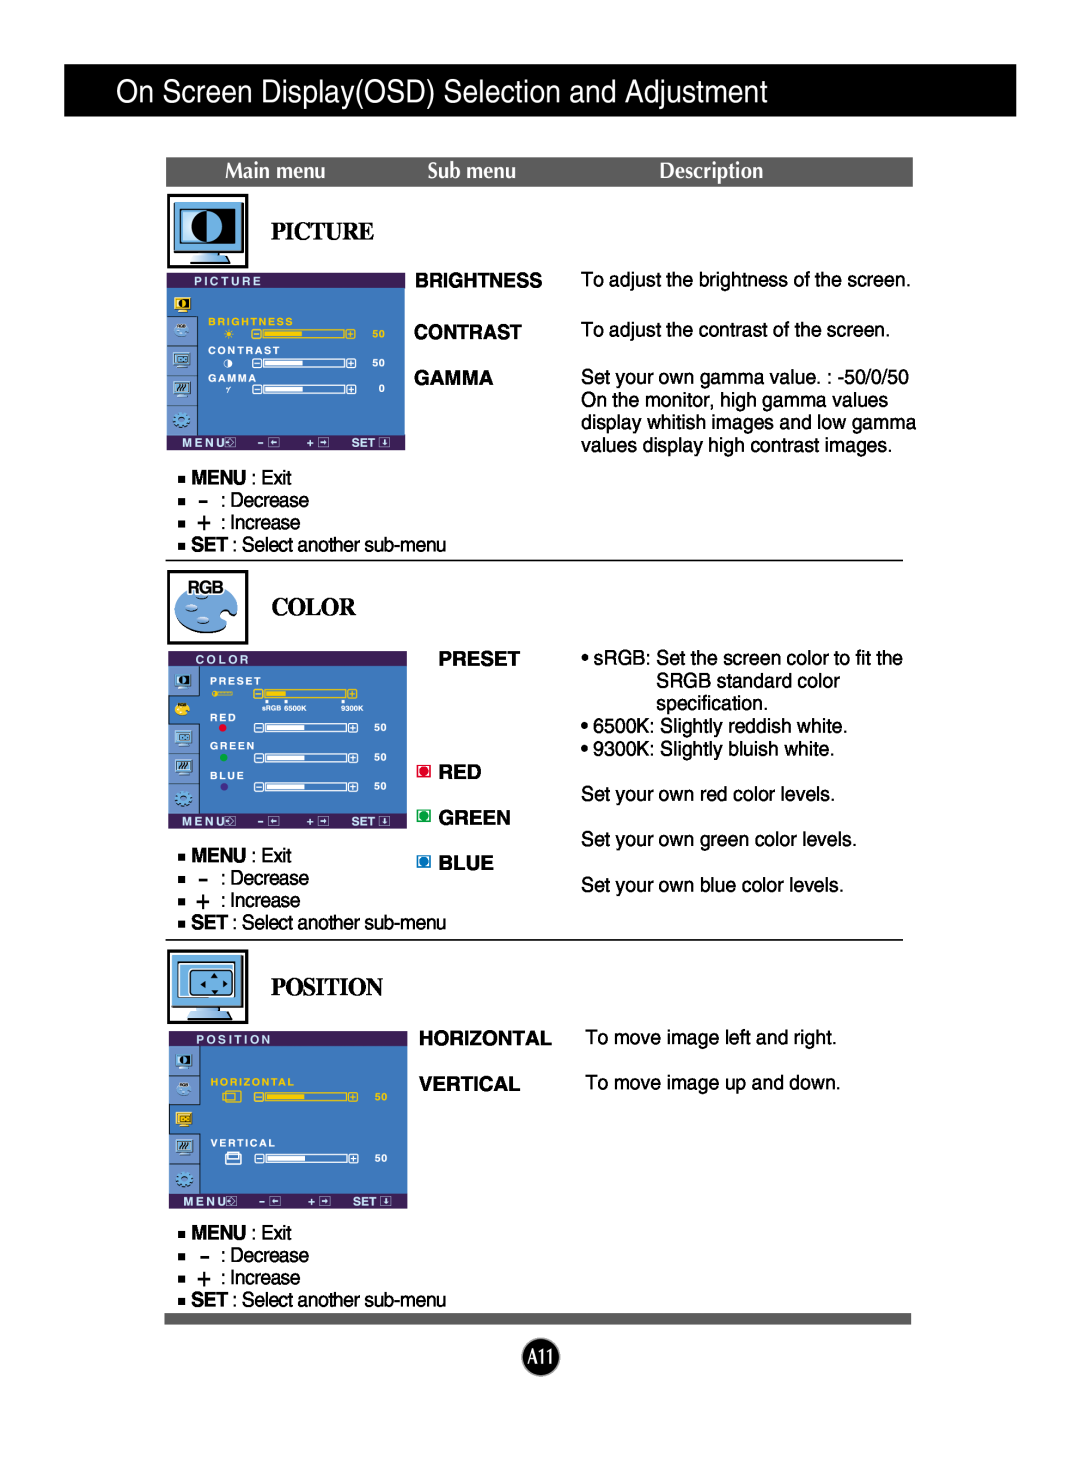 LG Electronics L1960TG Picture, Color, Position, Main menu, Description, On Screen DisplayOSD Selection and Adjustment 